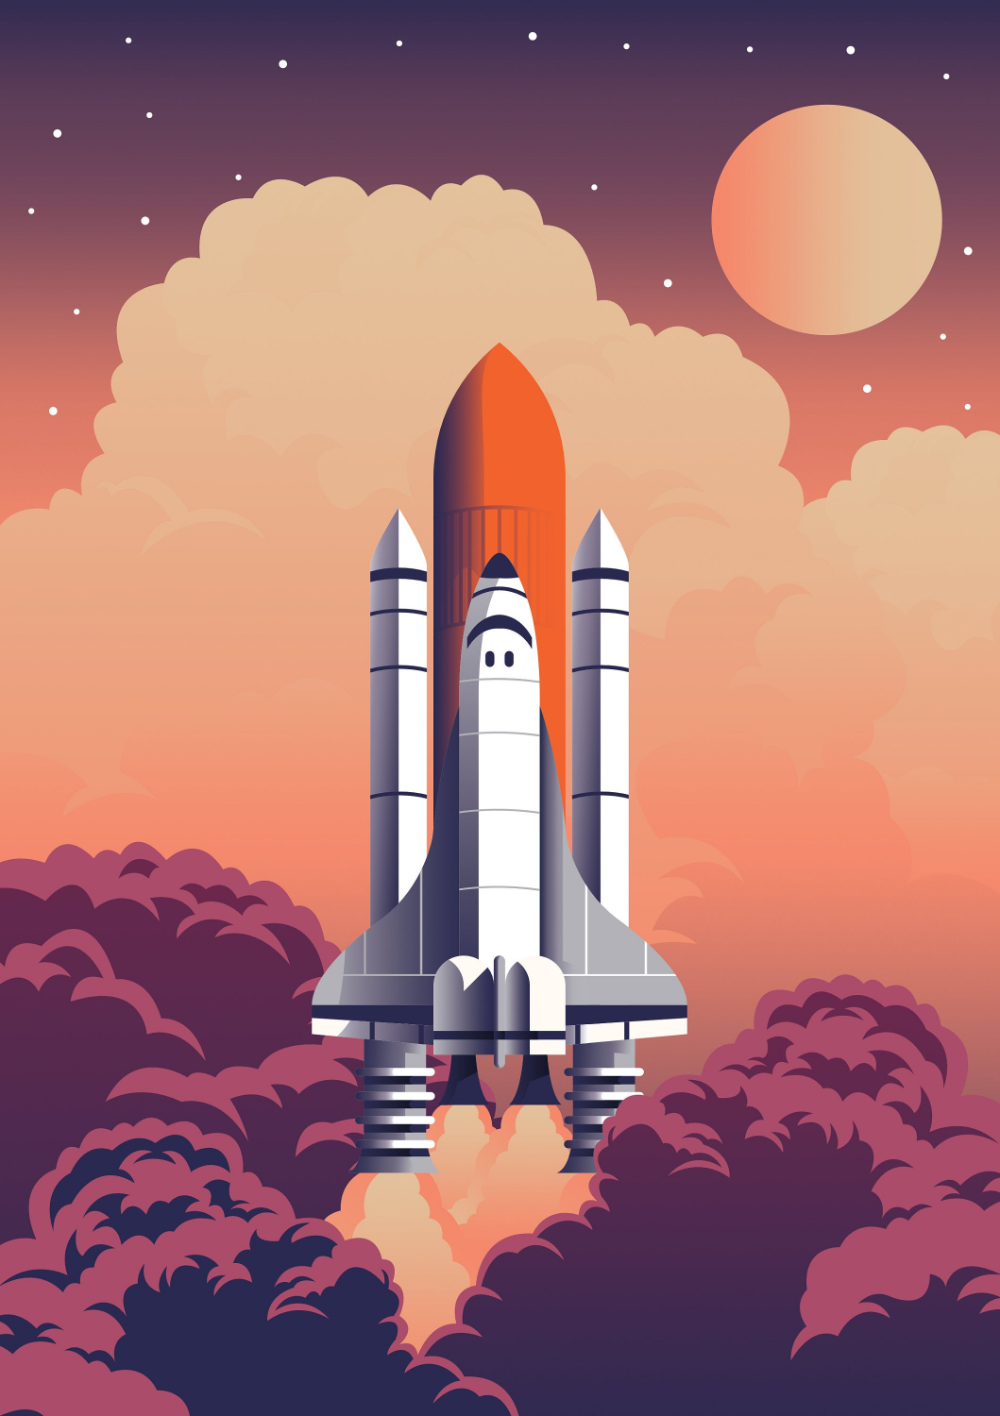 Beautiful Space Shuttle Illustration Print Nasa Poster Kids